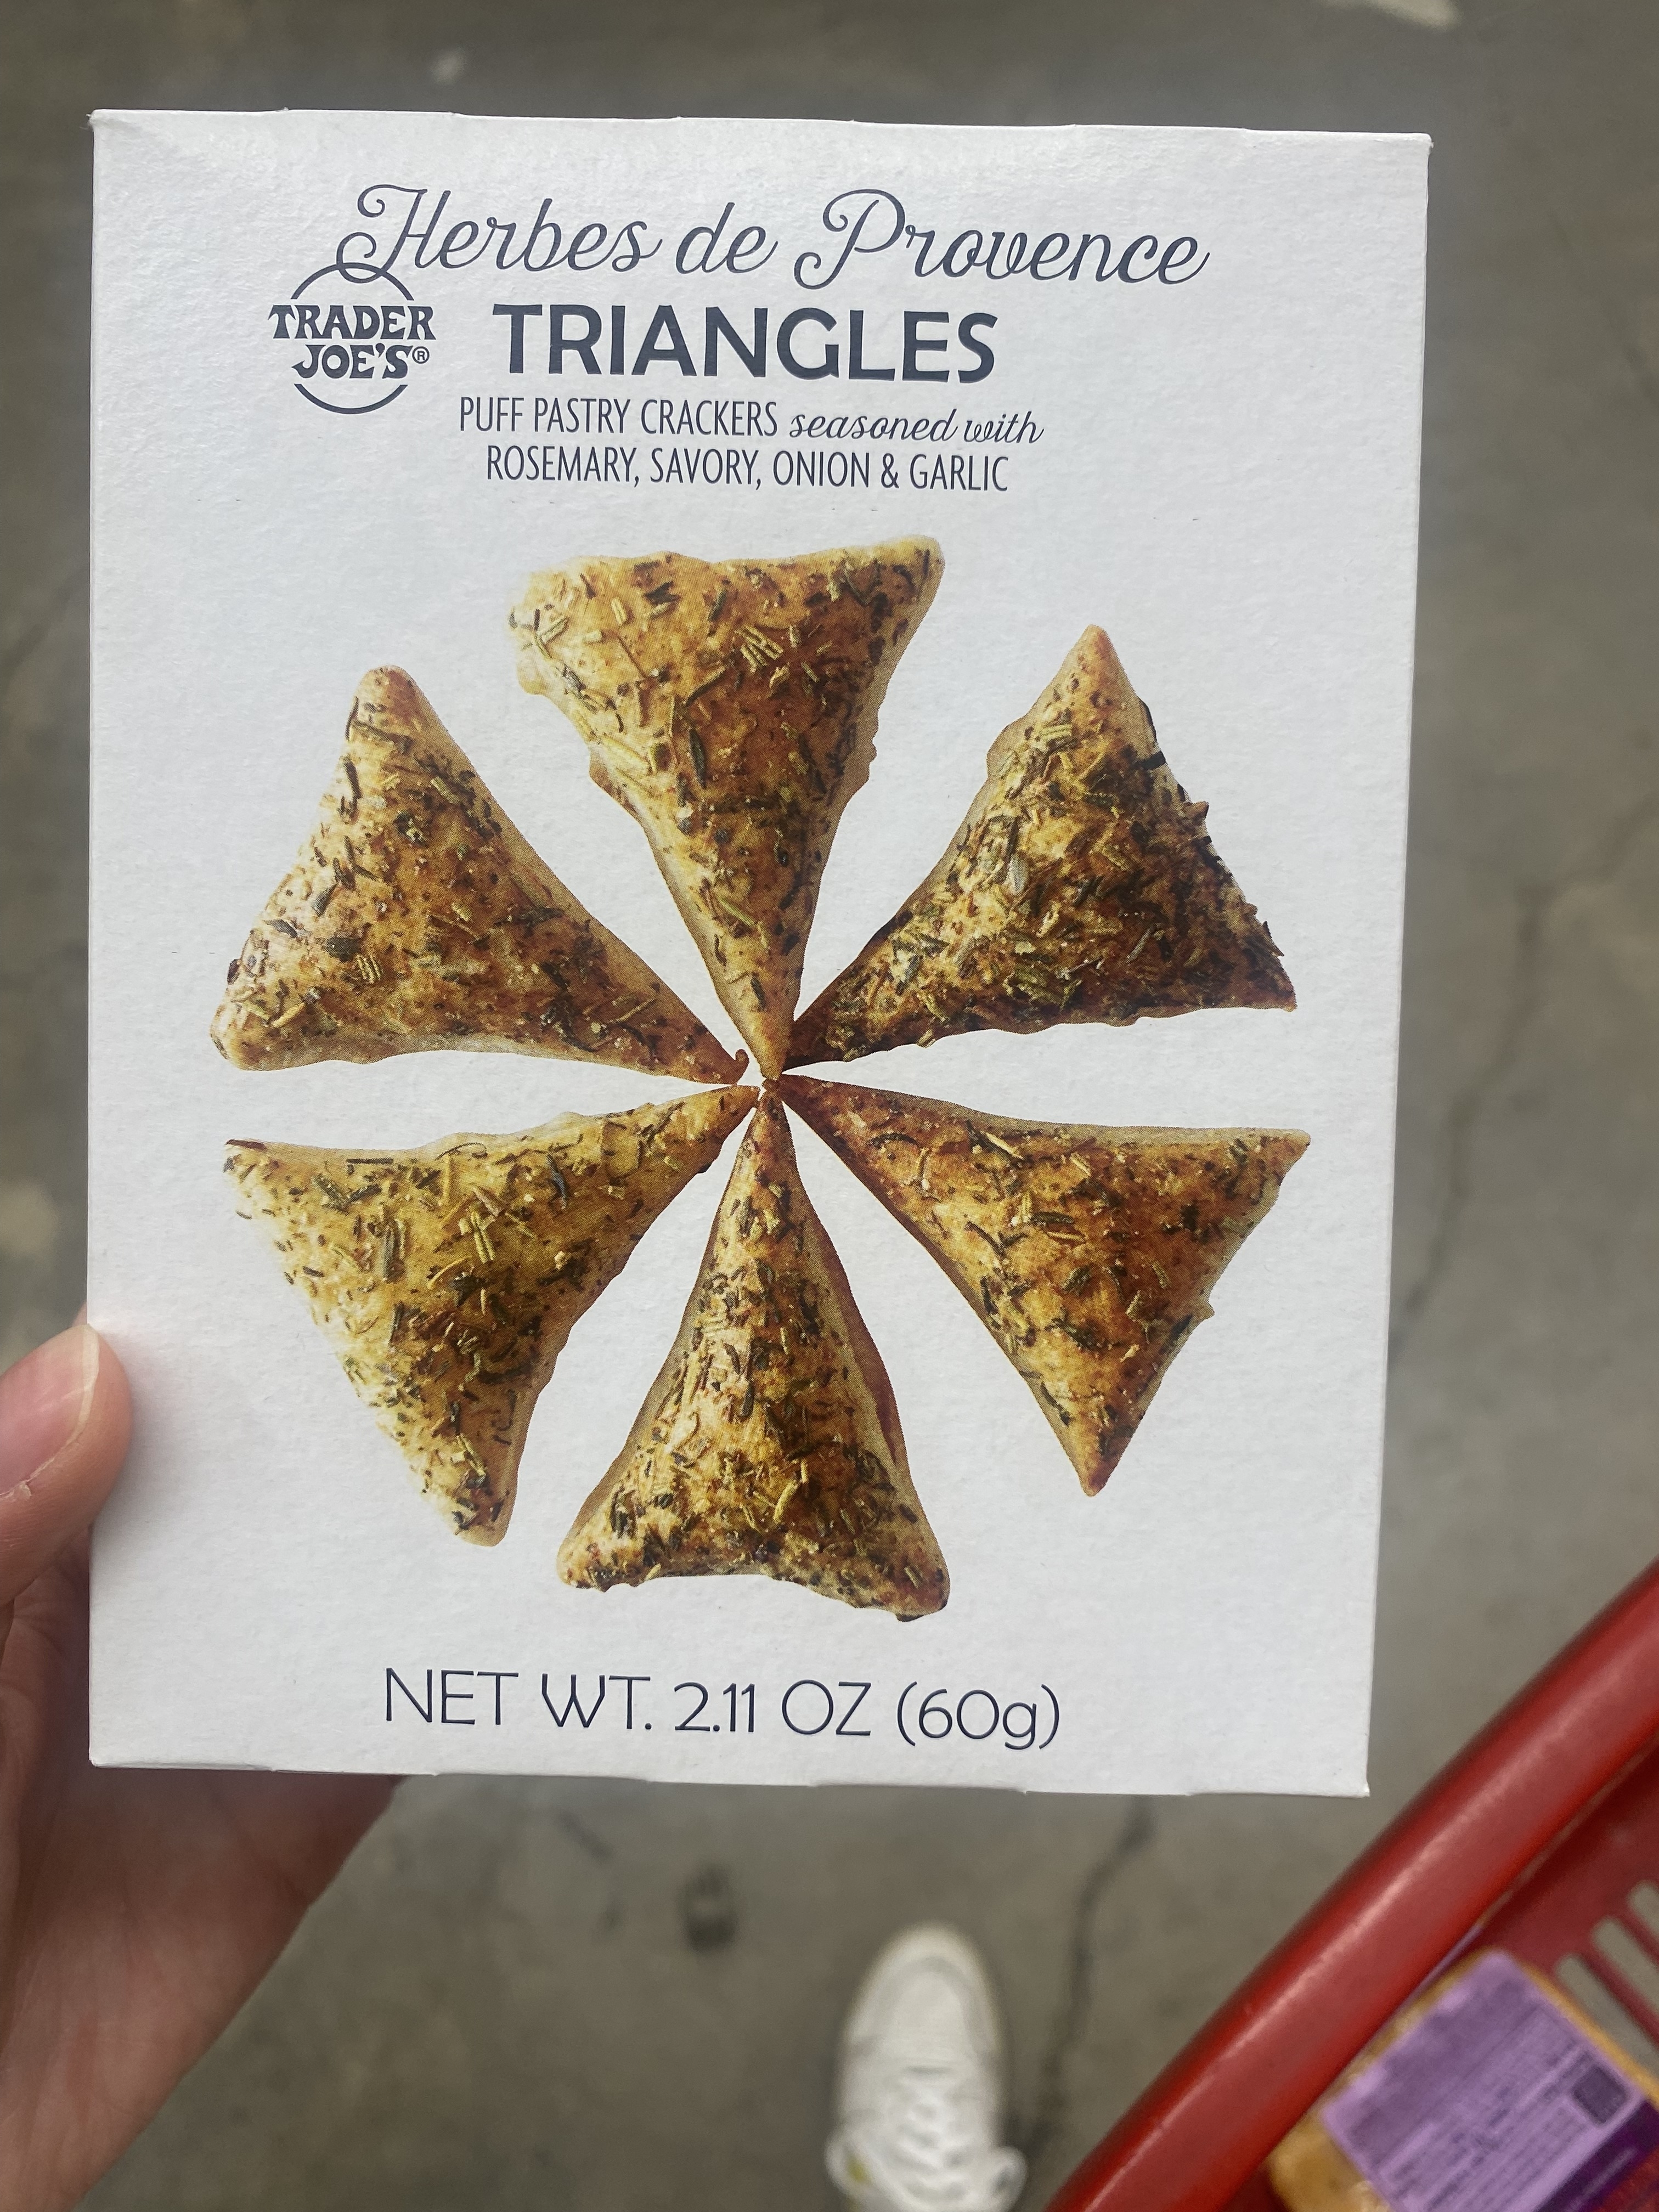 a box of Herbes de Provence triangles